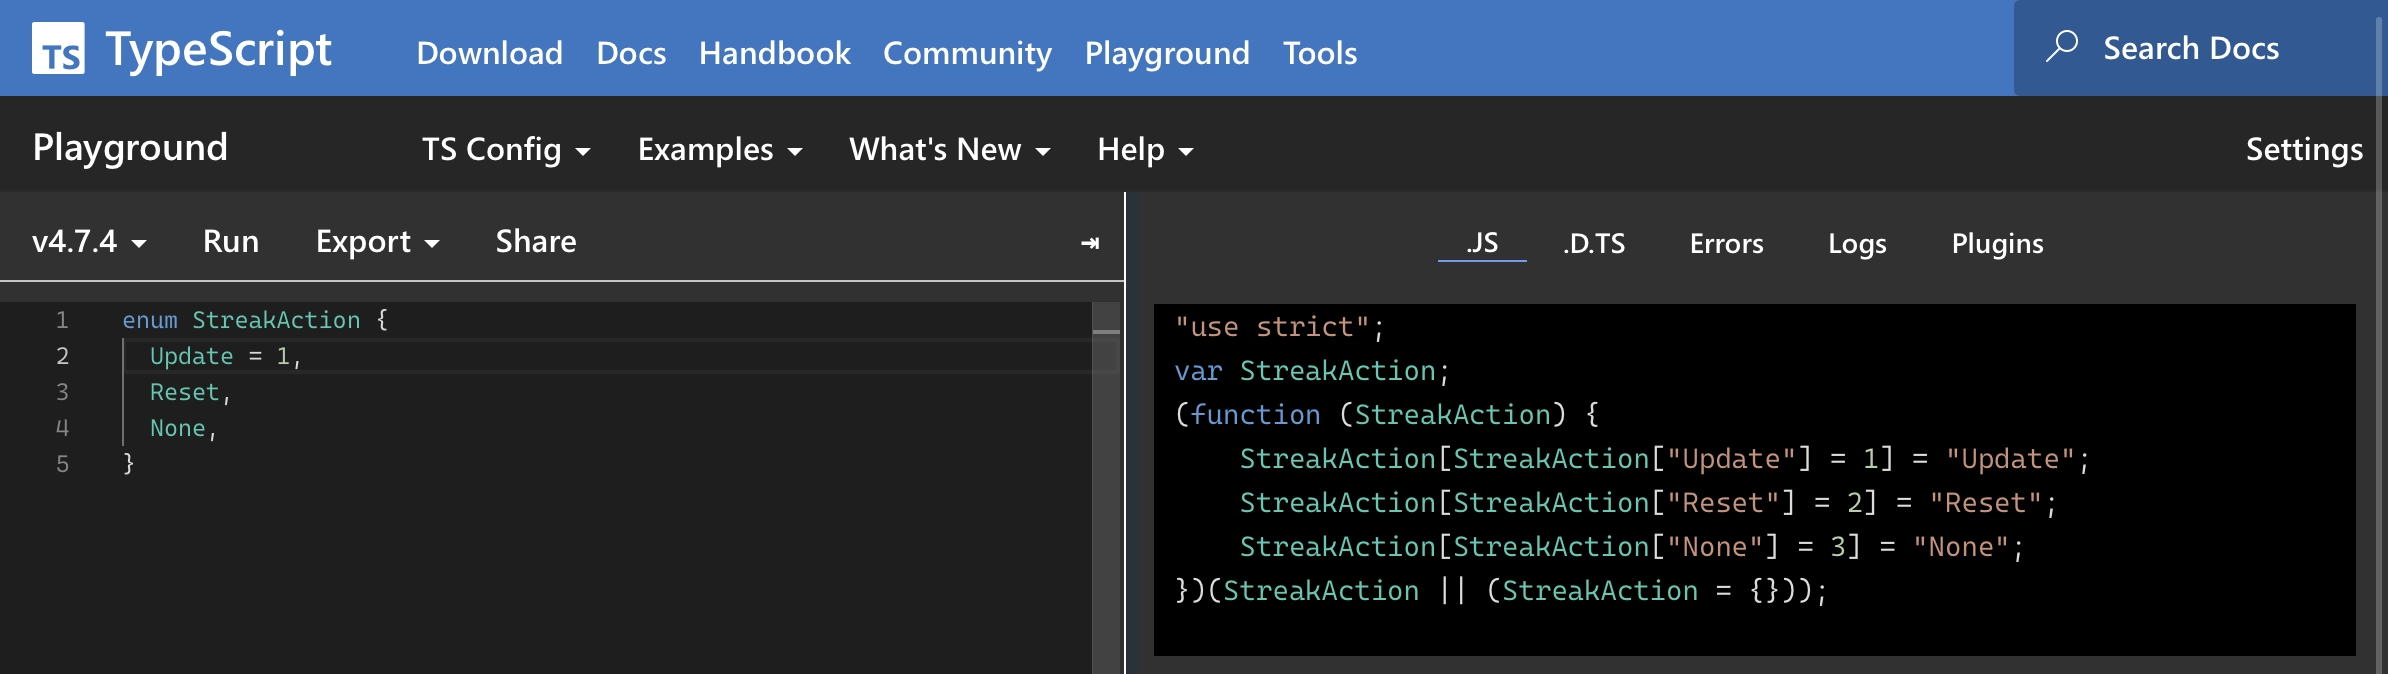 TypeScript Playground 2 - StreackAction